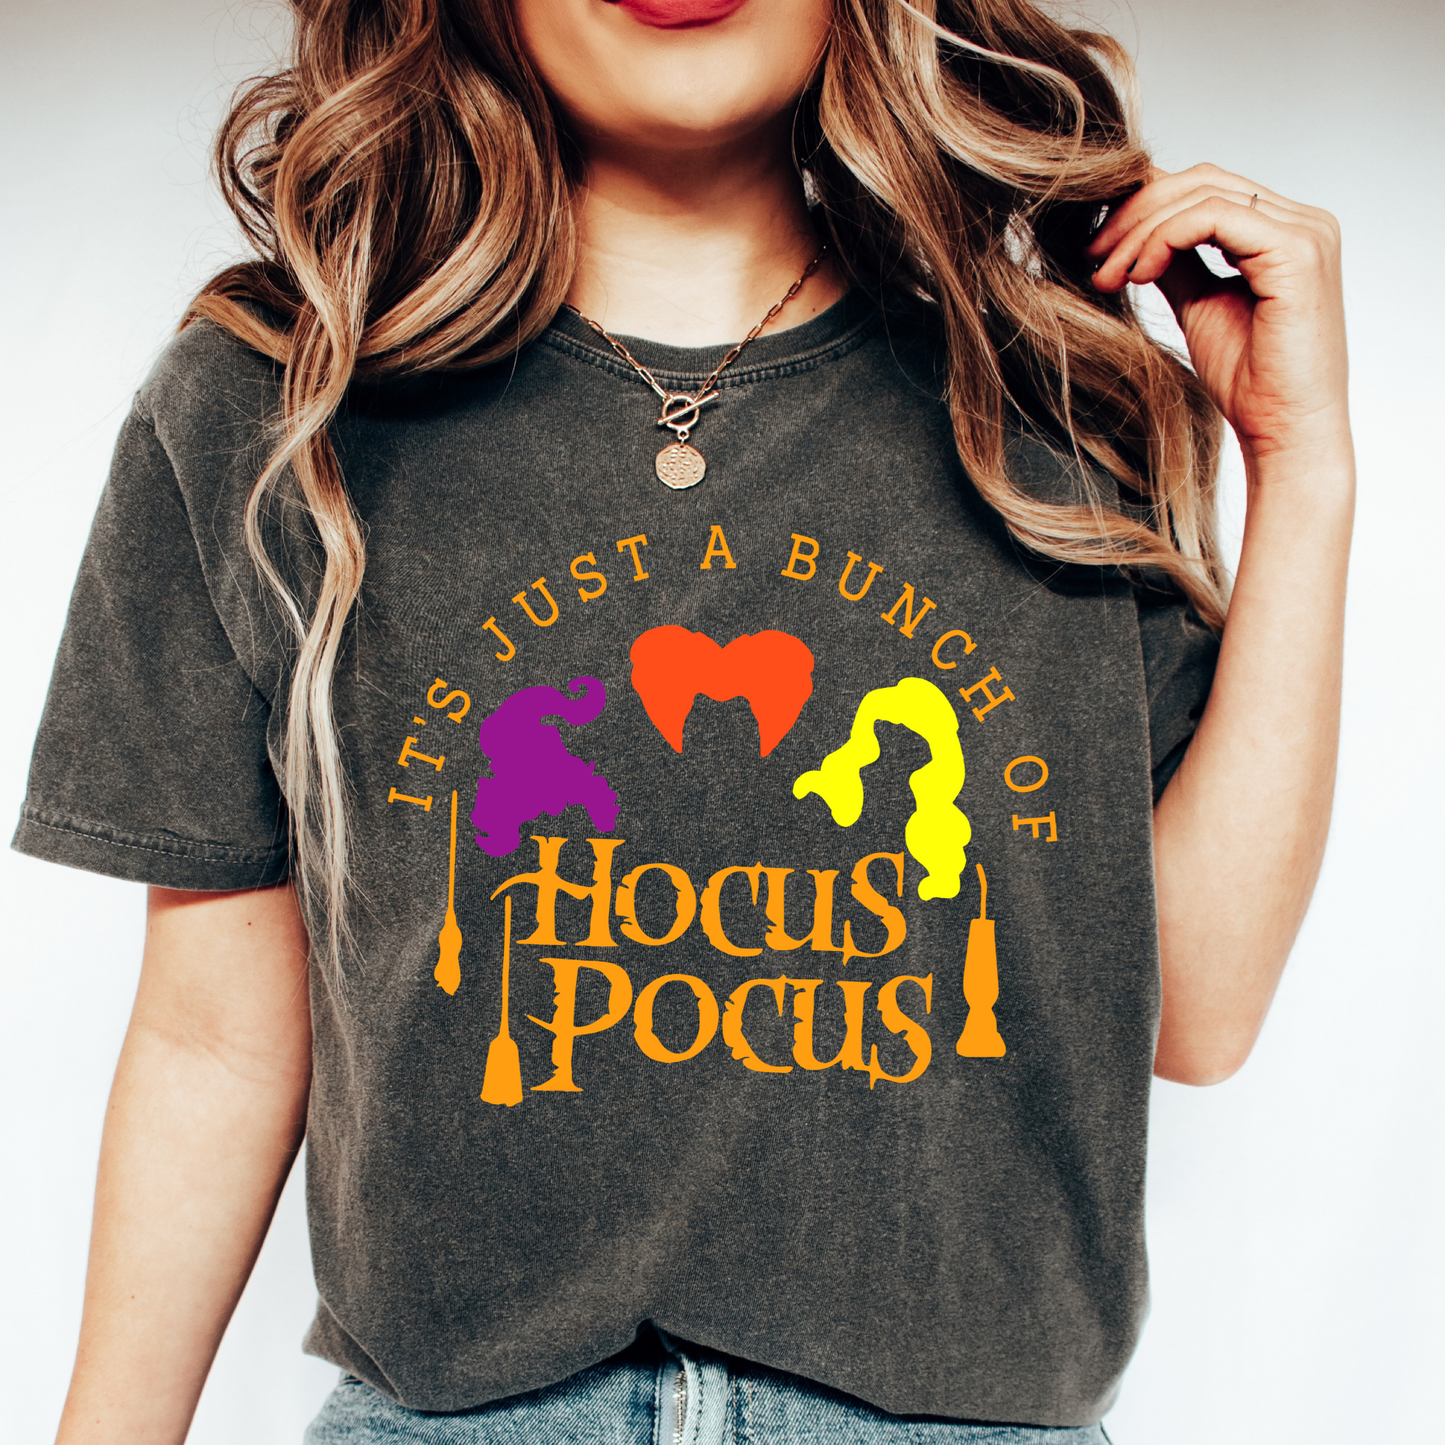 Bunch of Hocus Pocus T Shirt